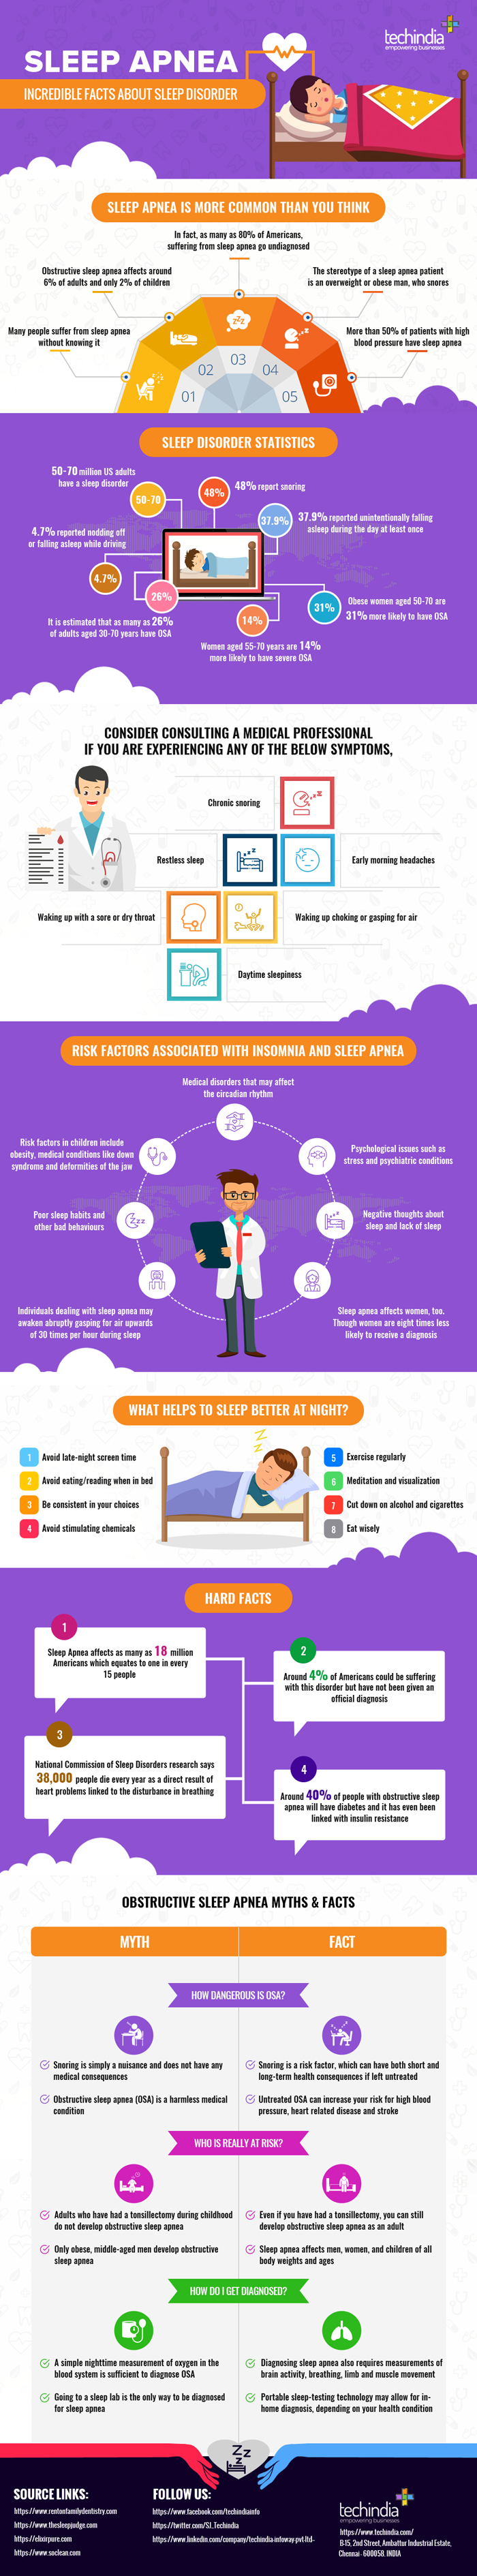 Sleep Apnea Disorder: The Hard Facts - Infographic